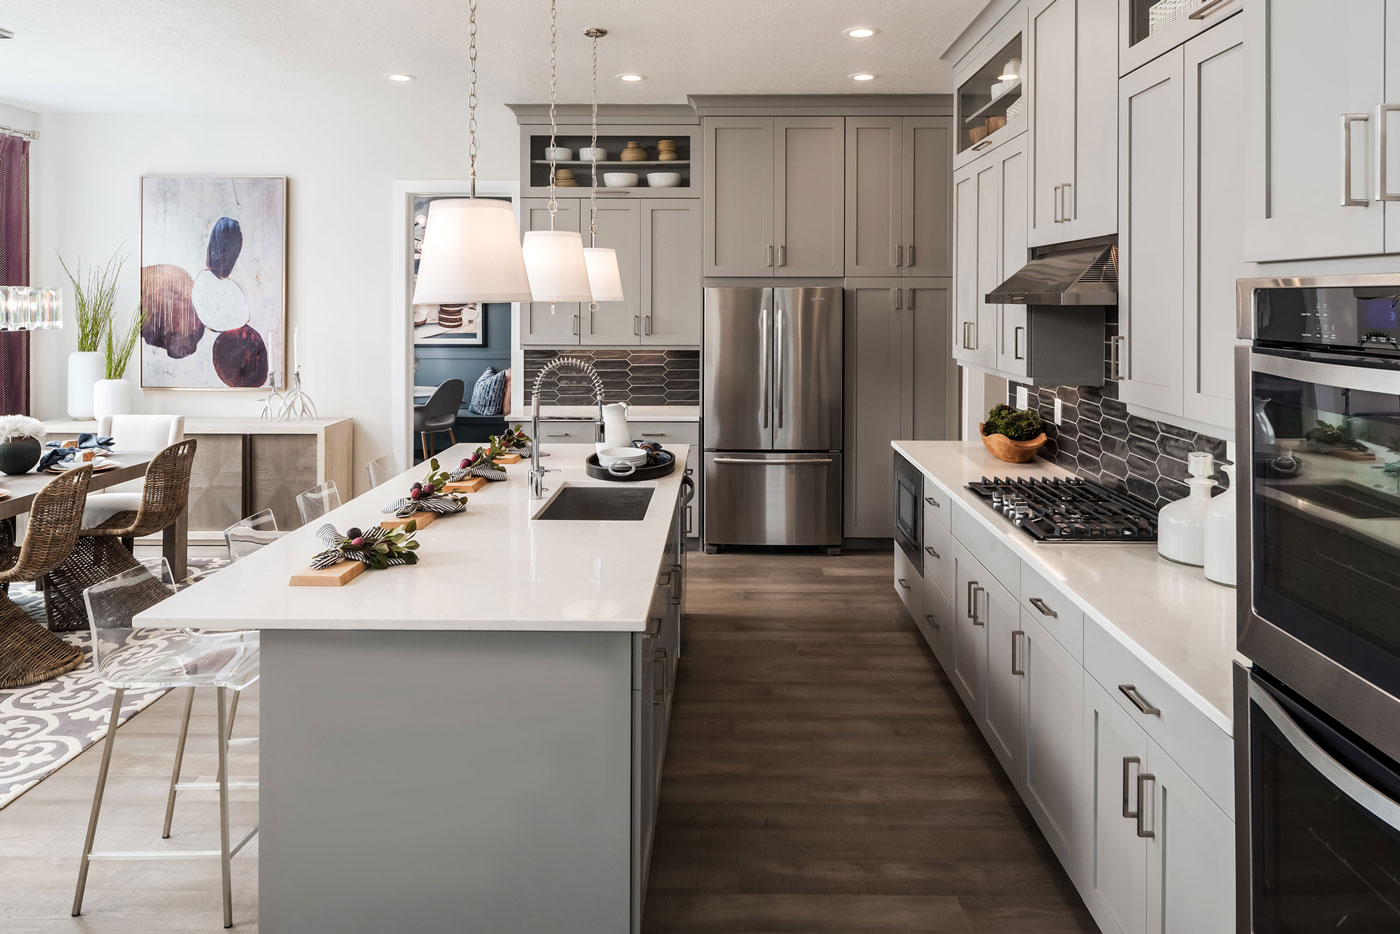 Light gray cabinetry, quartz countertops, and contrasting gray tile backsplash in Utah kitchen.